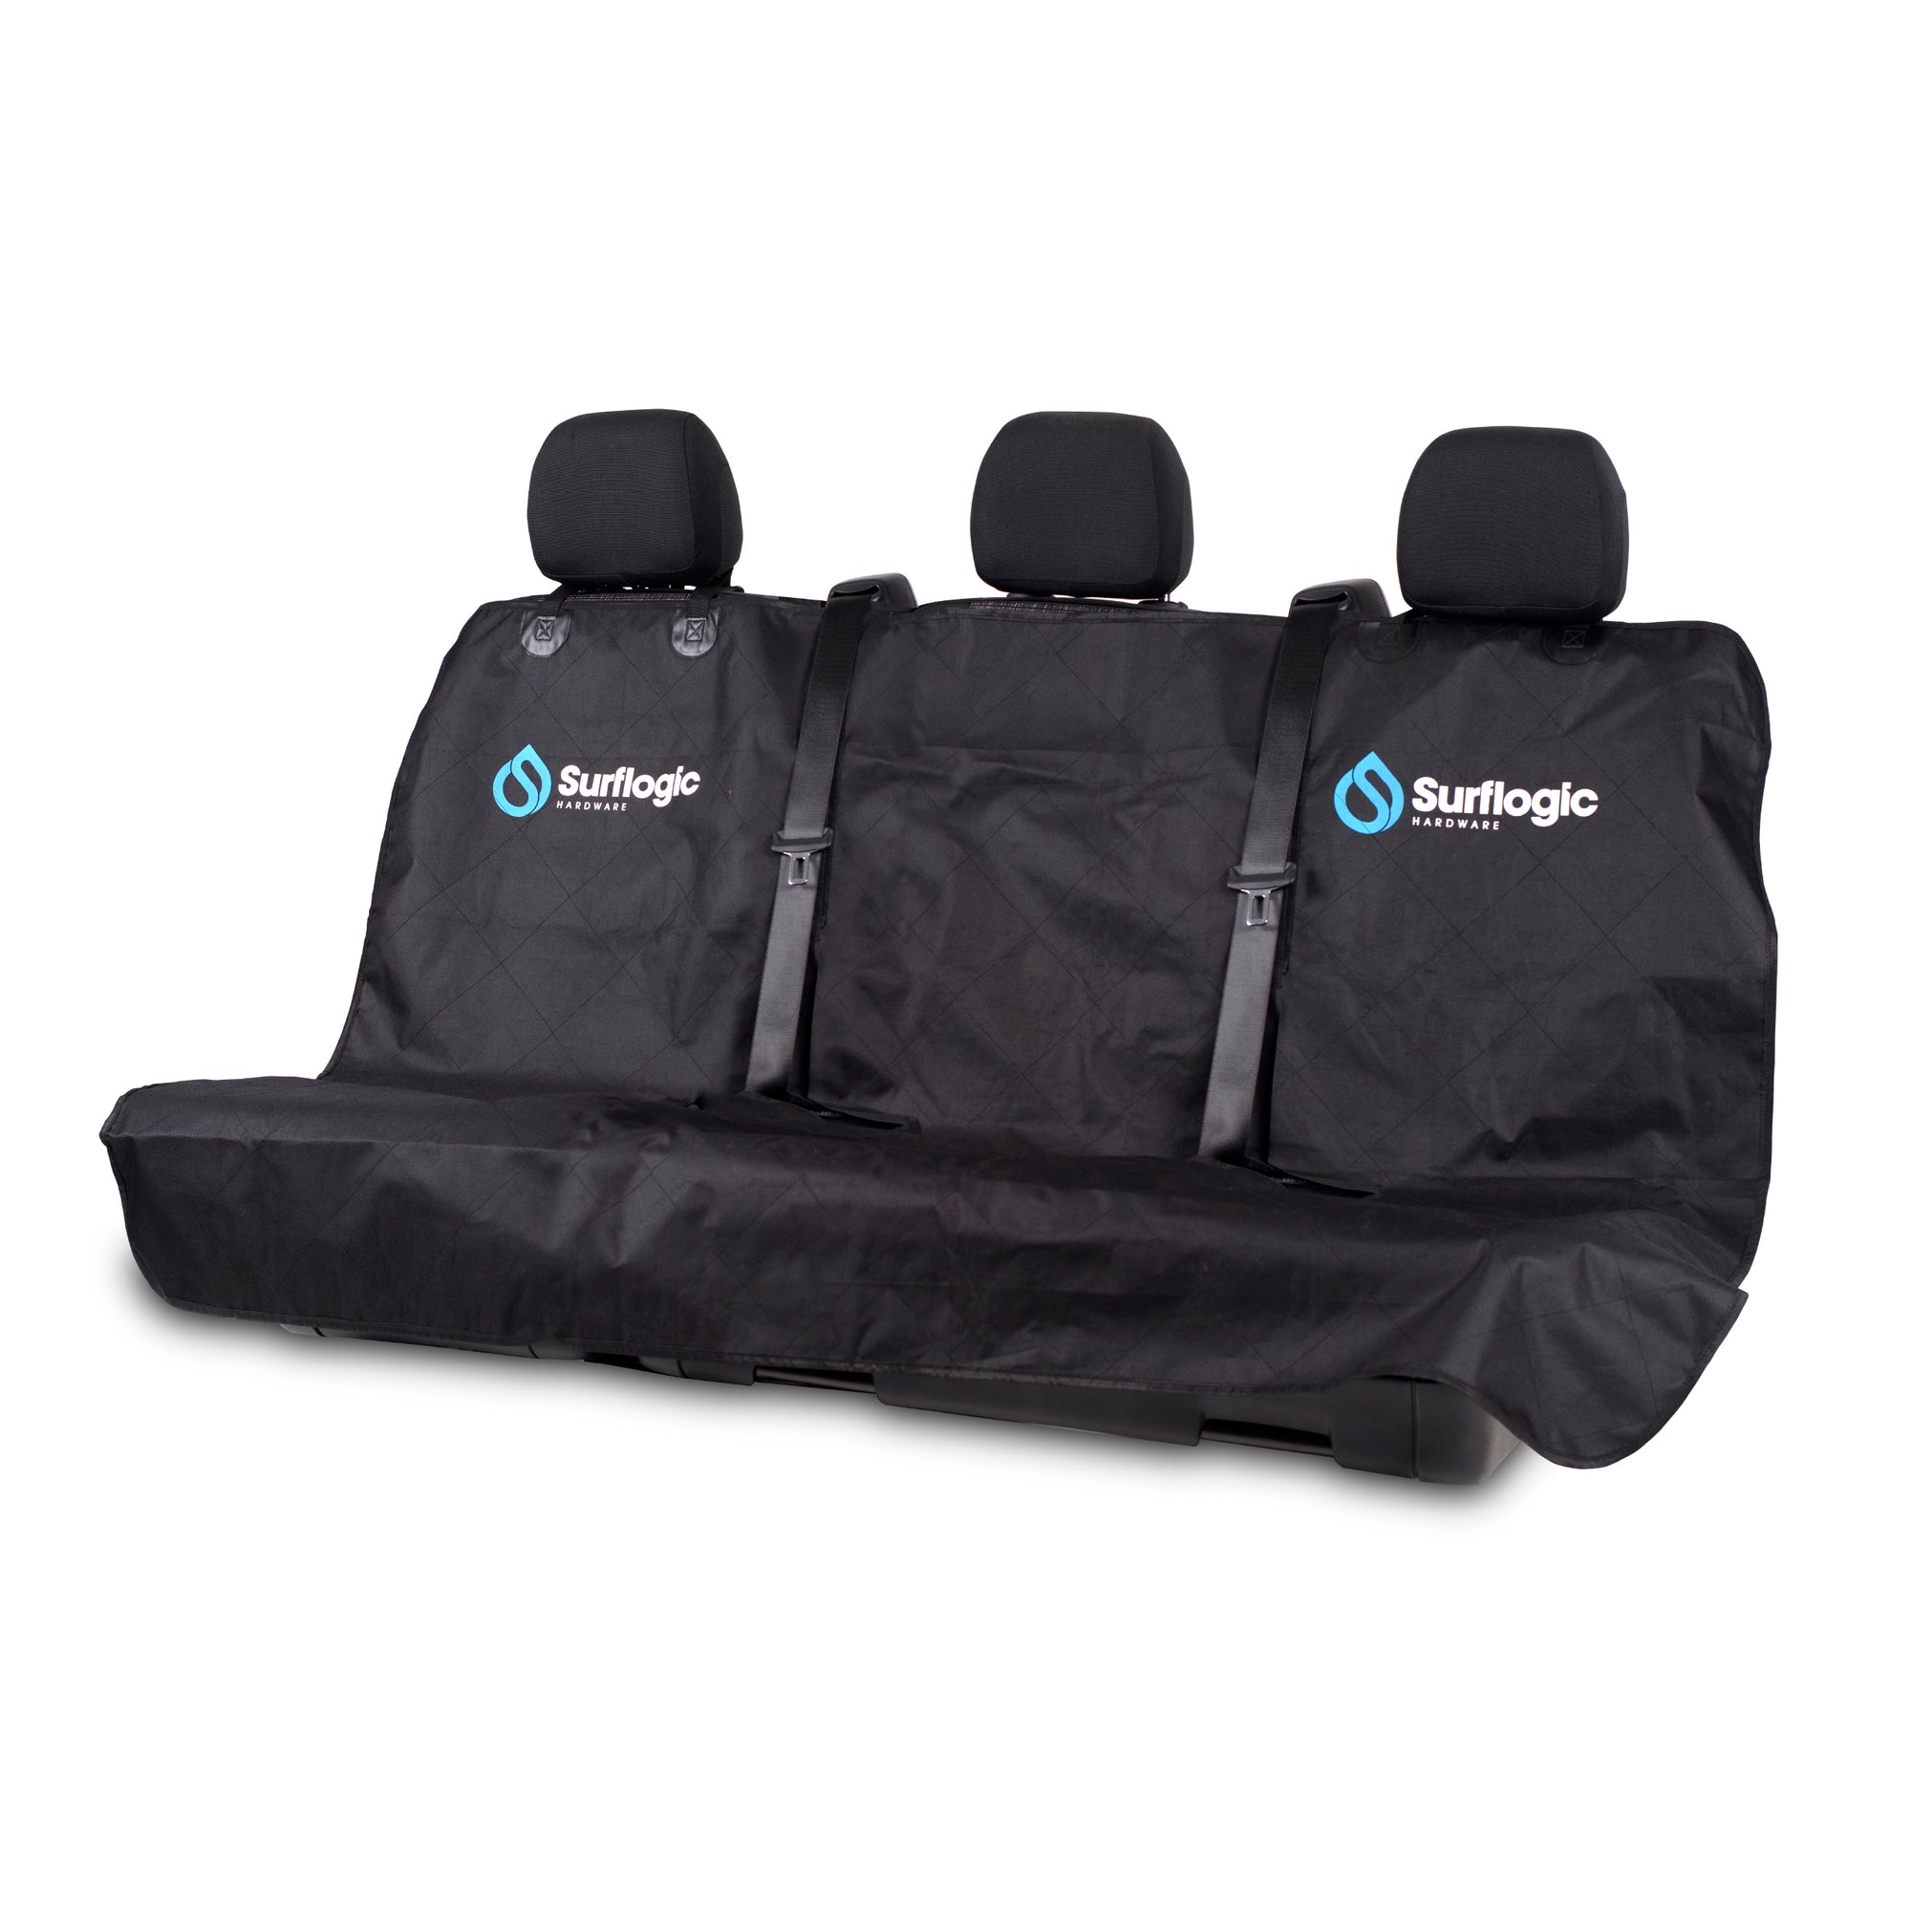 Surflogic Triple Universal Car Seat Cover